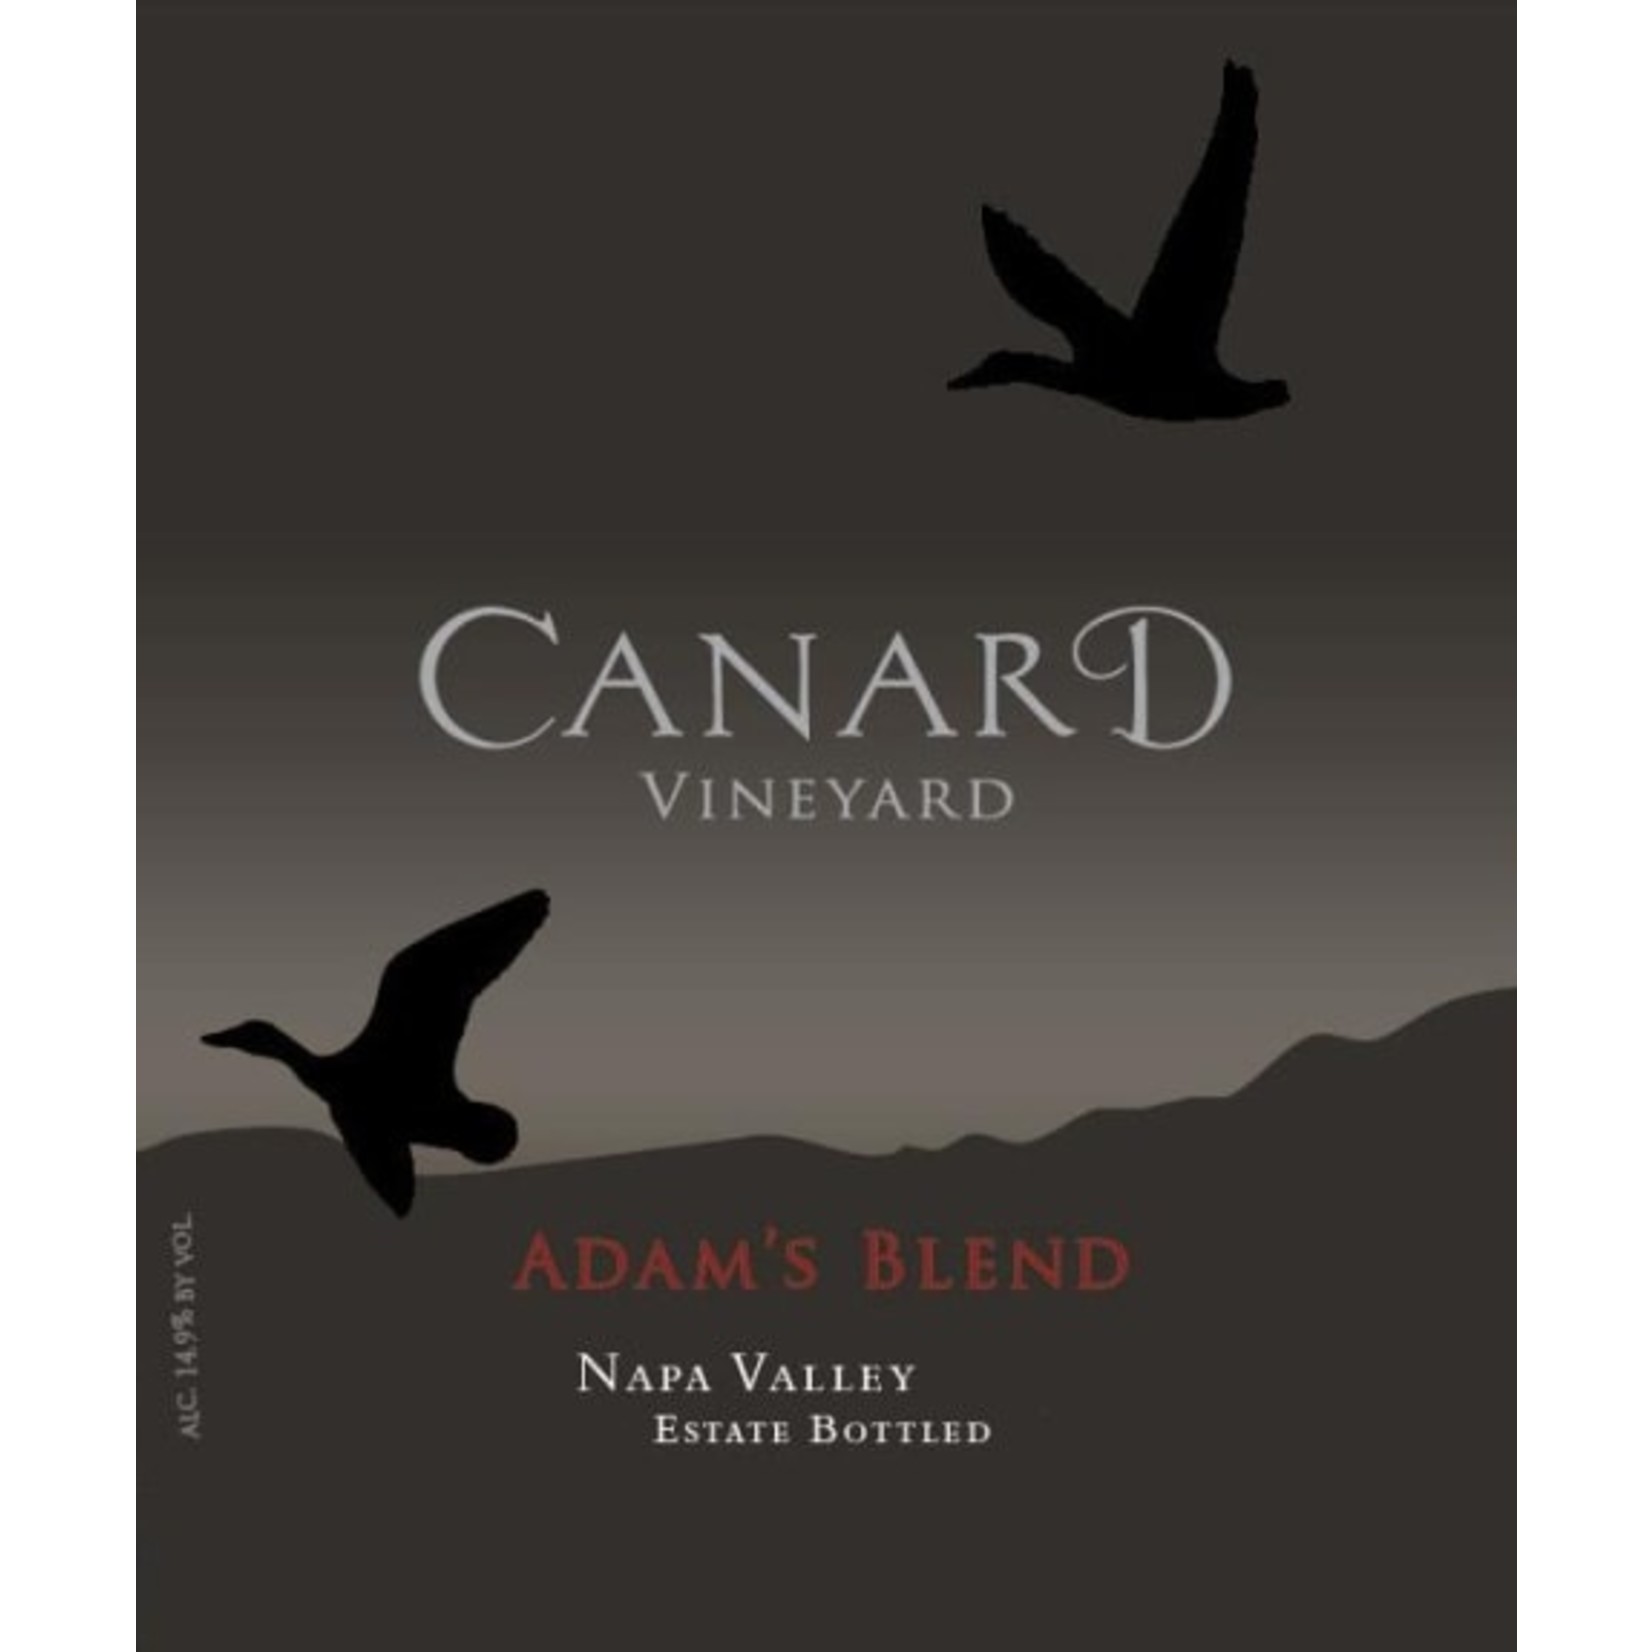 Canard Vineyard, Adams Blend 2009, Napa Valley, CA